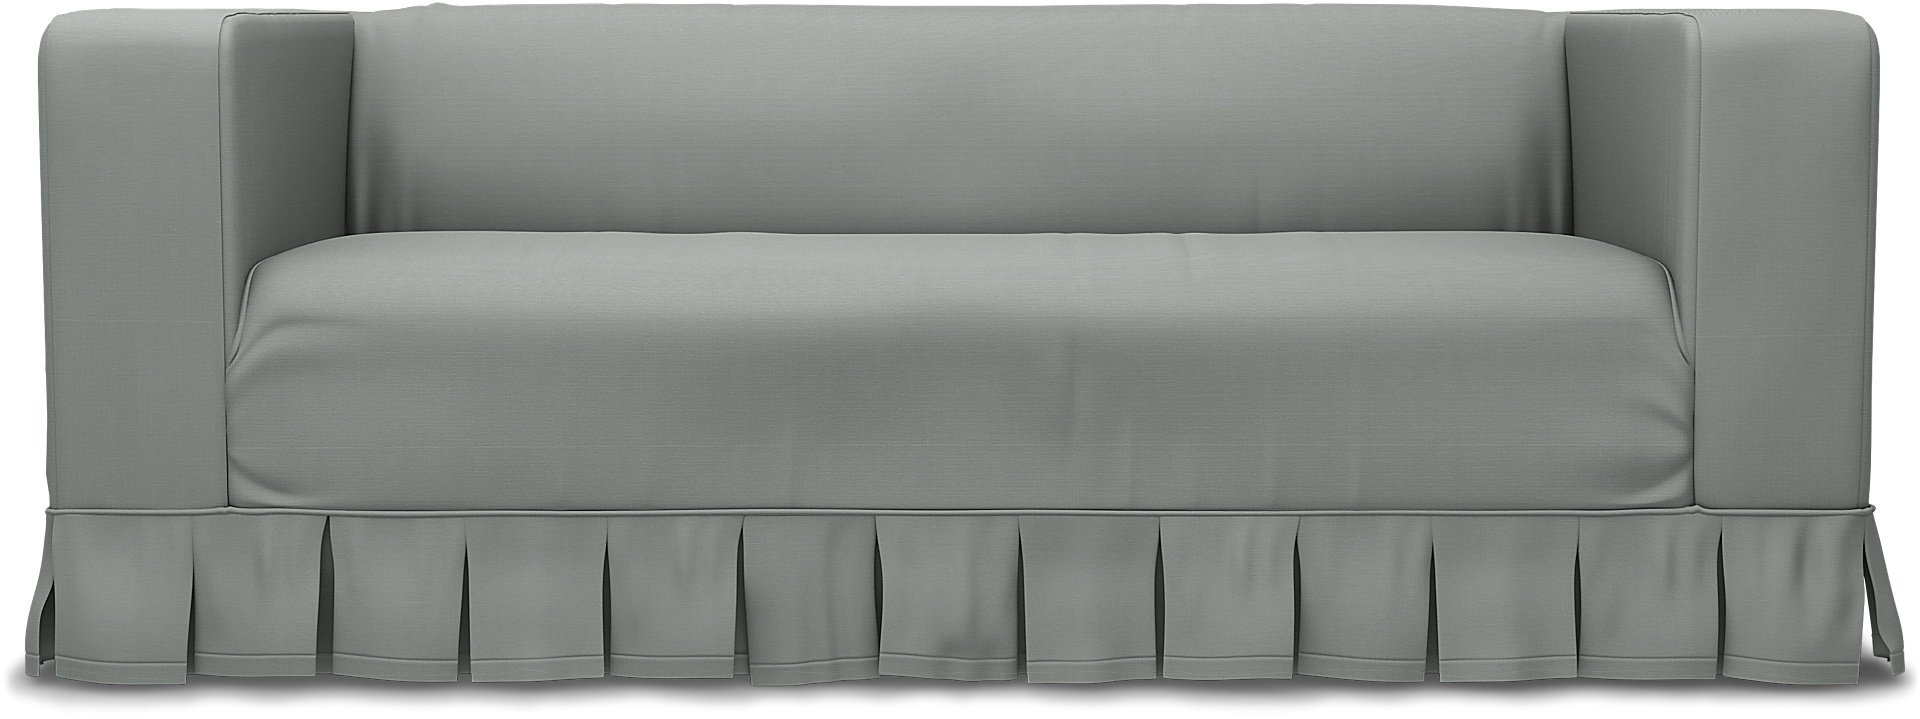 IKEA - Klippan 2 Seater Sofa Cover, Drizzle, Cotton - Bemz